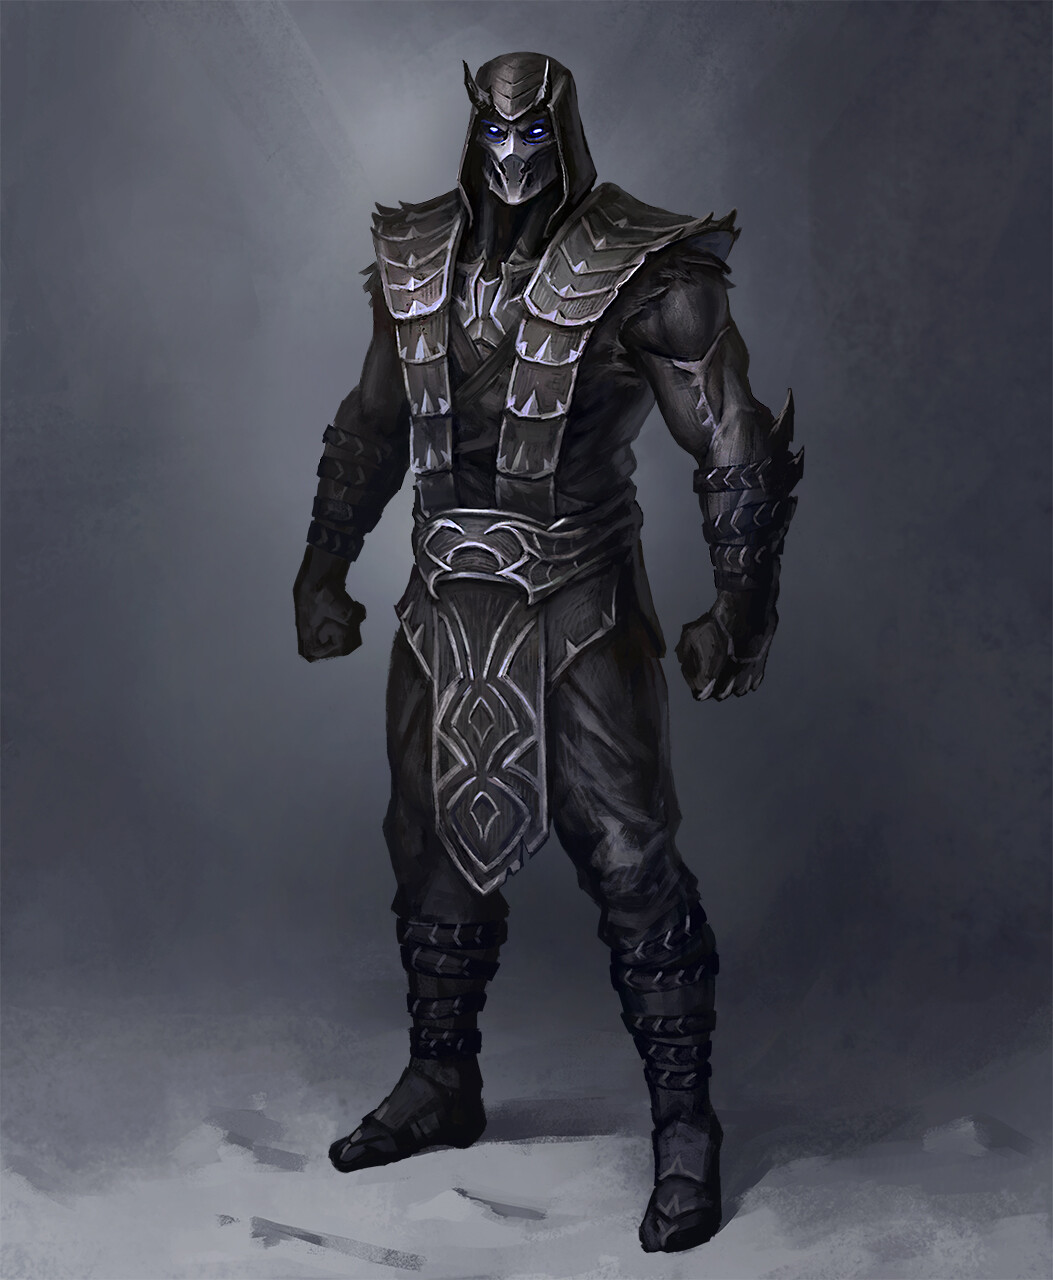 ArtStation - Mortal Kombat Character Concept